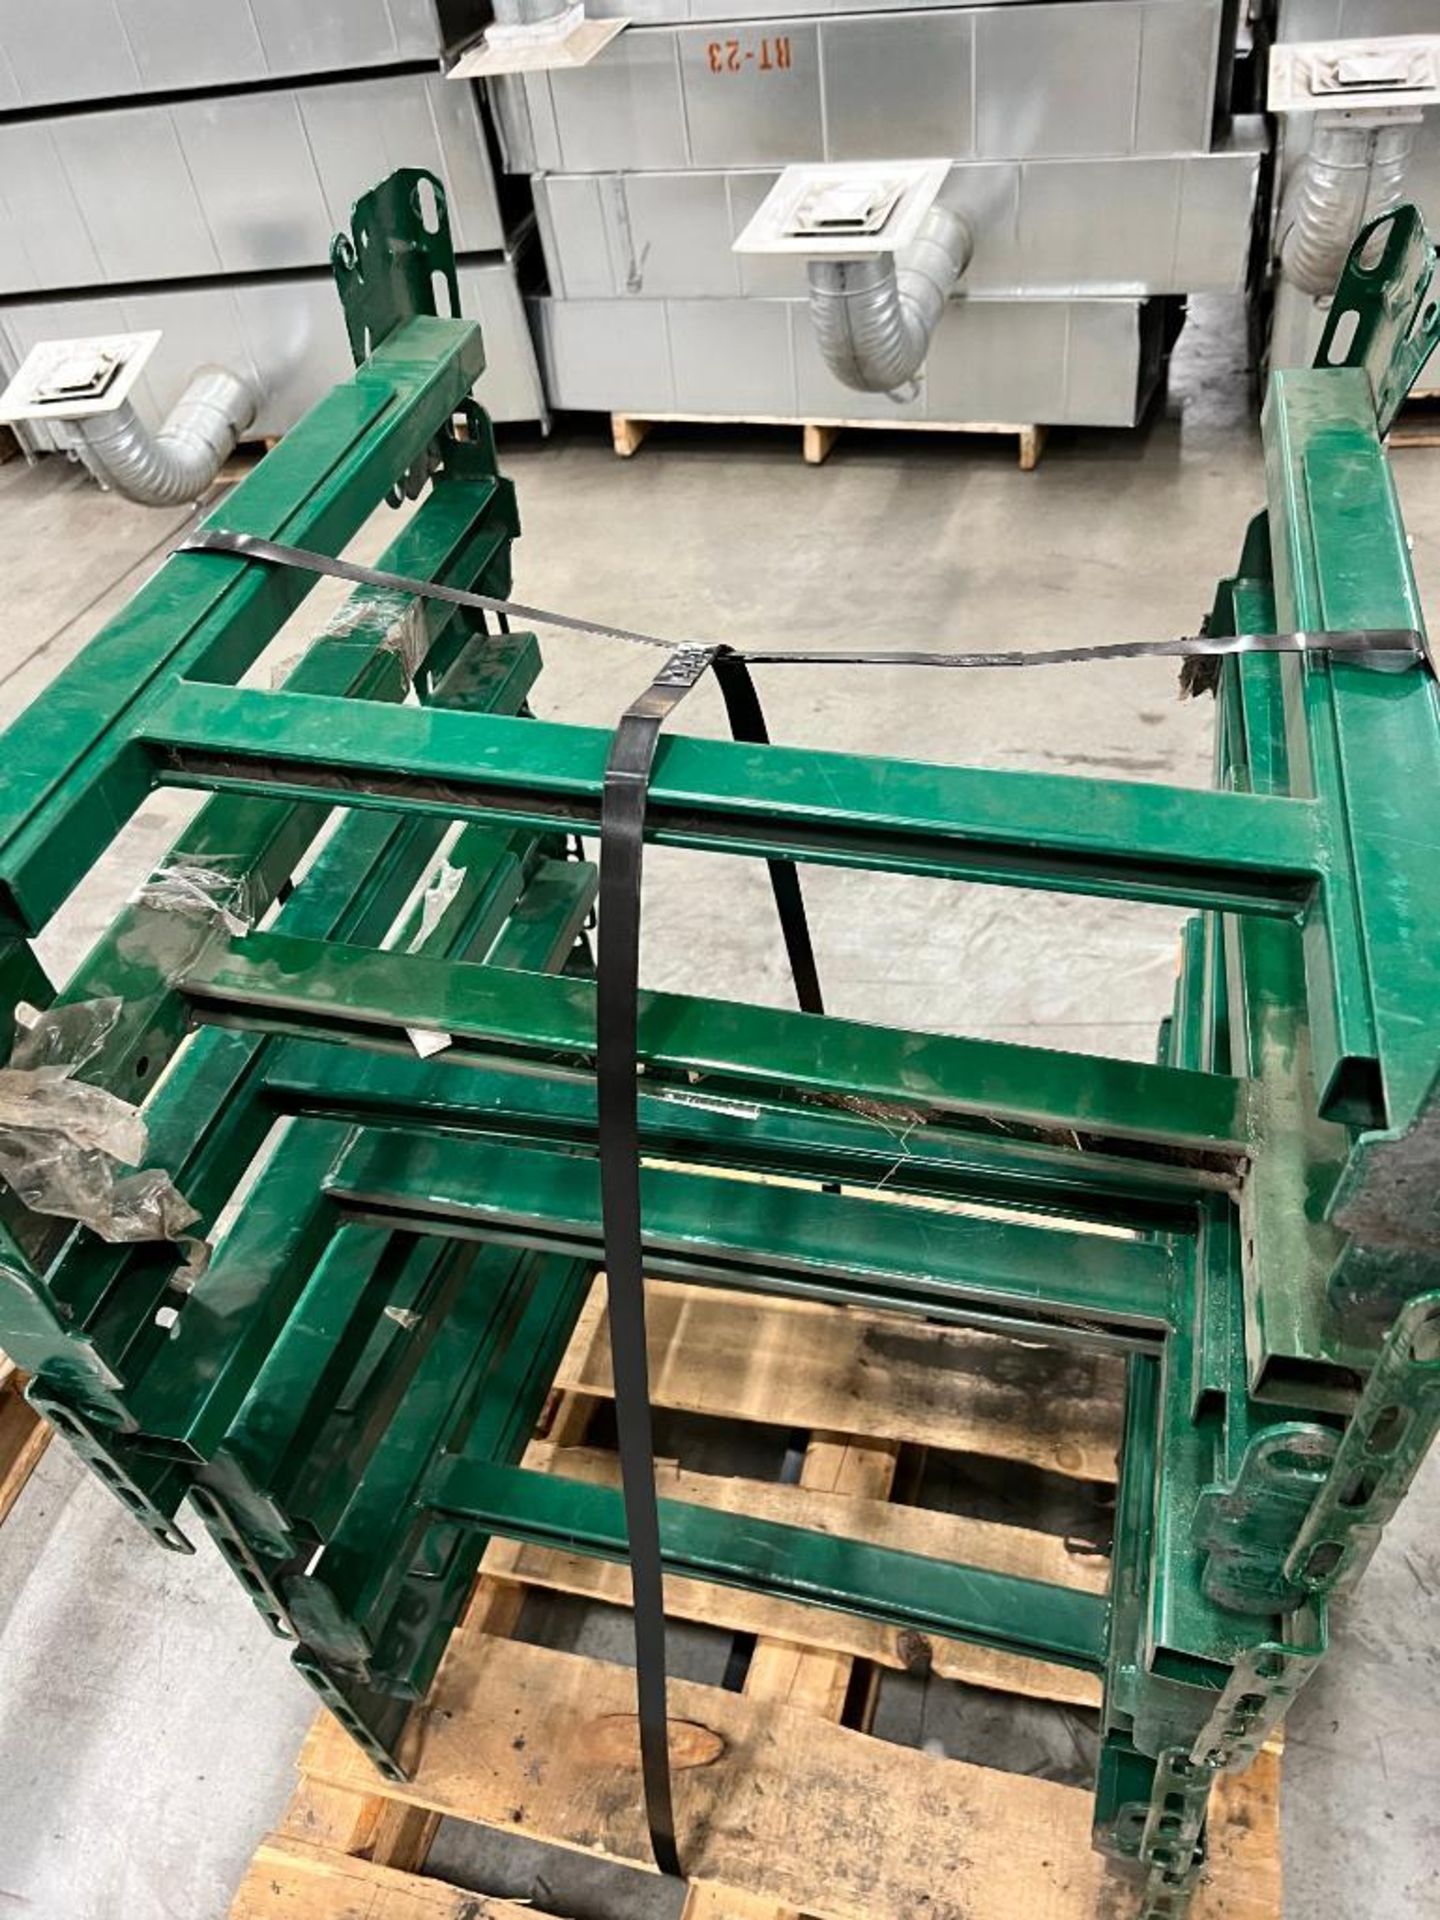 (168x) Rapistan H Stands for Gravity Roller Conveyor, 24-1/2" Wide - Image 3 of 15